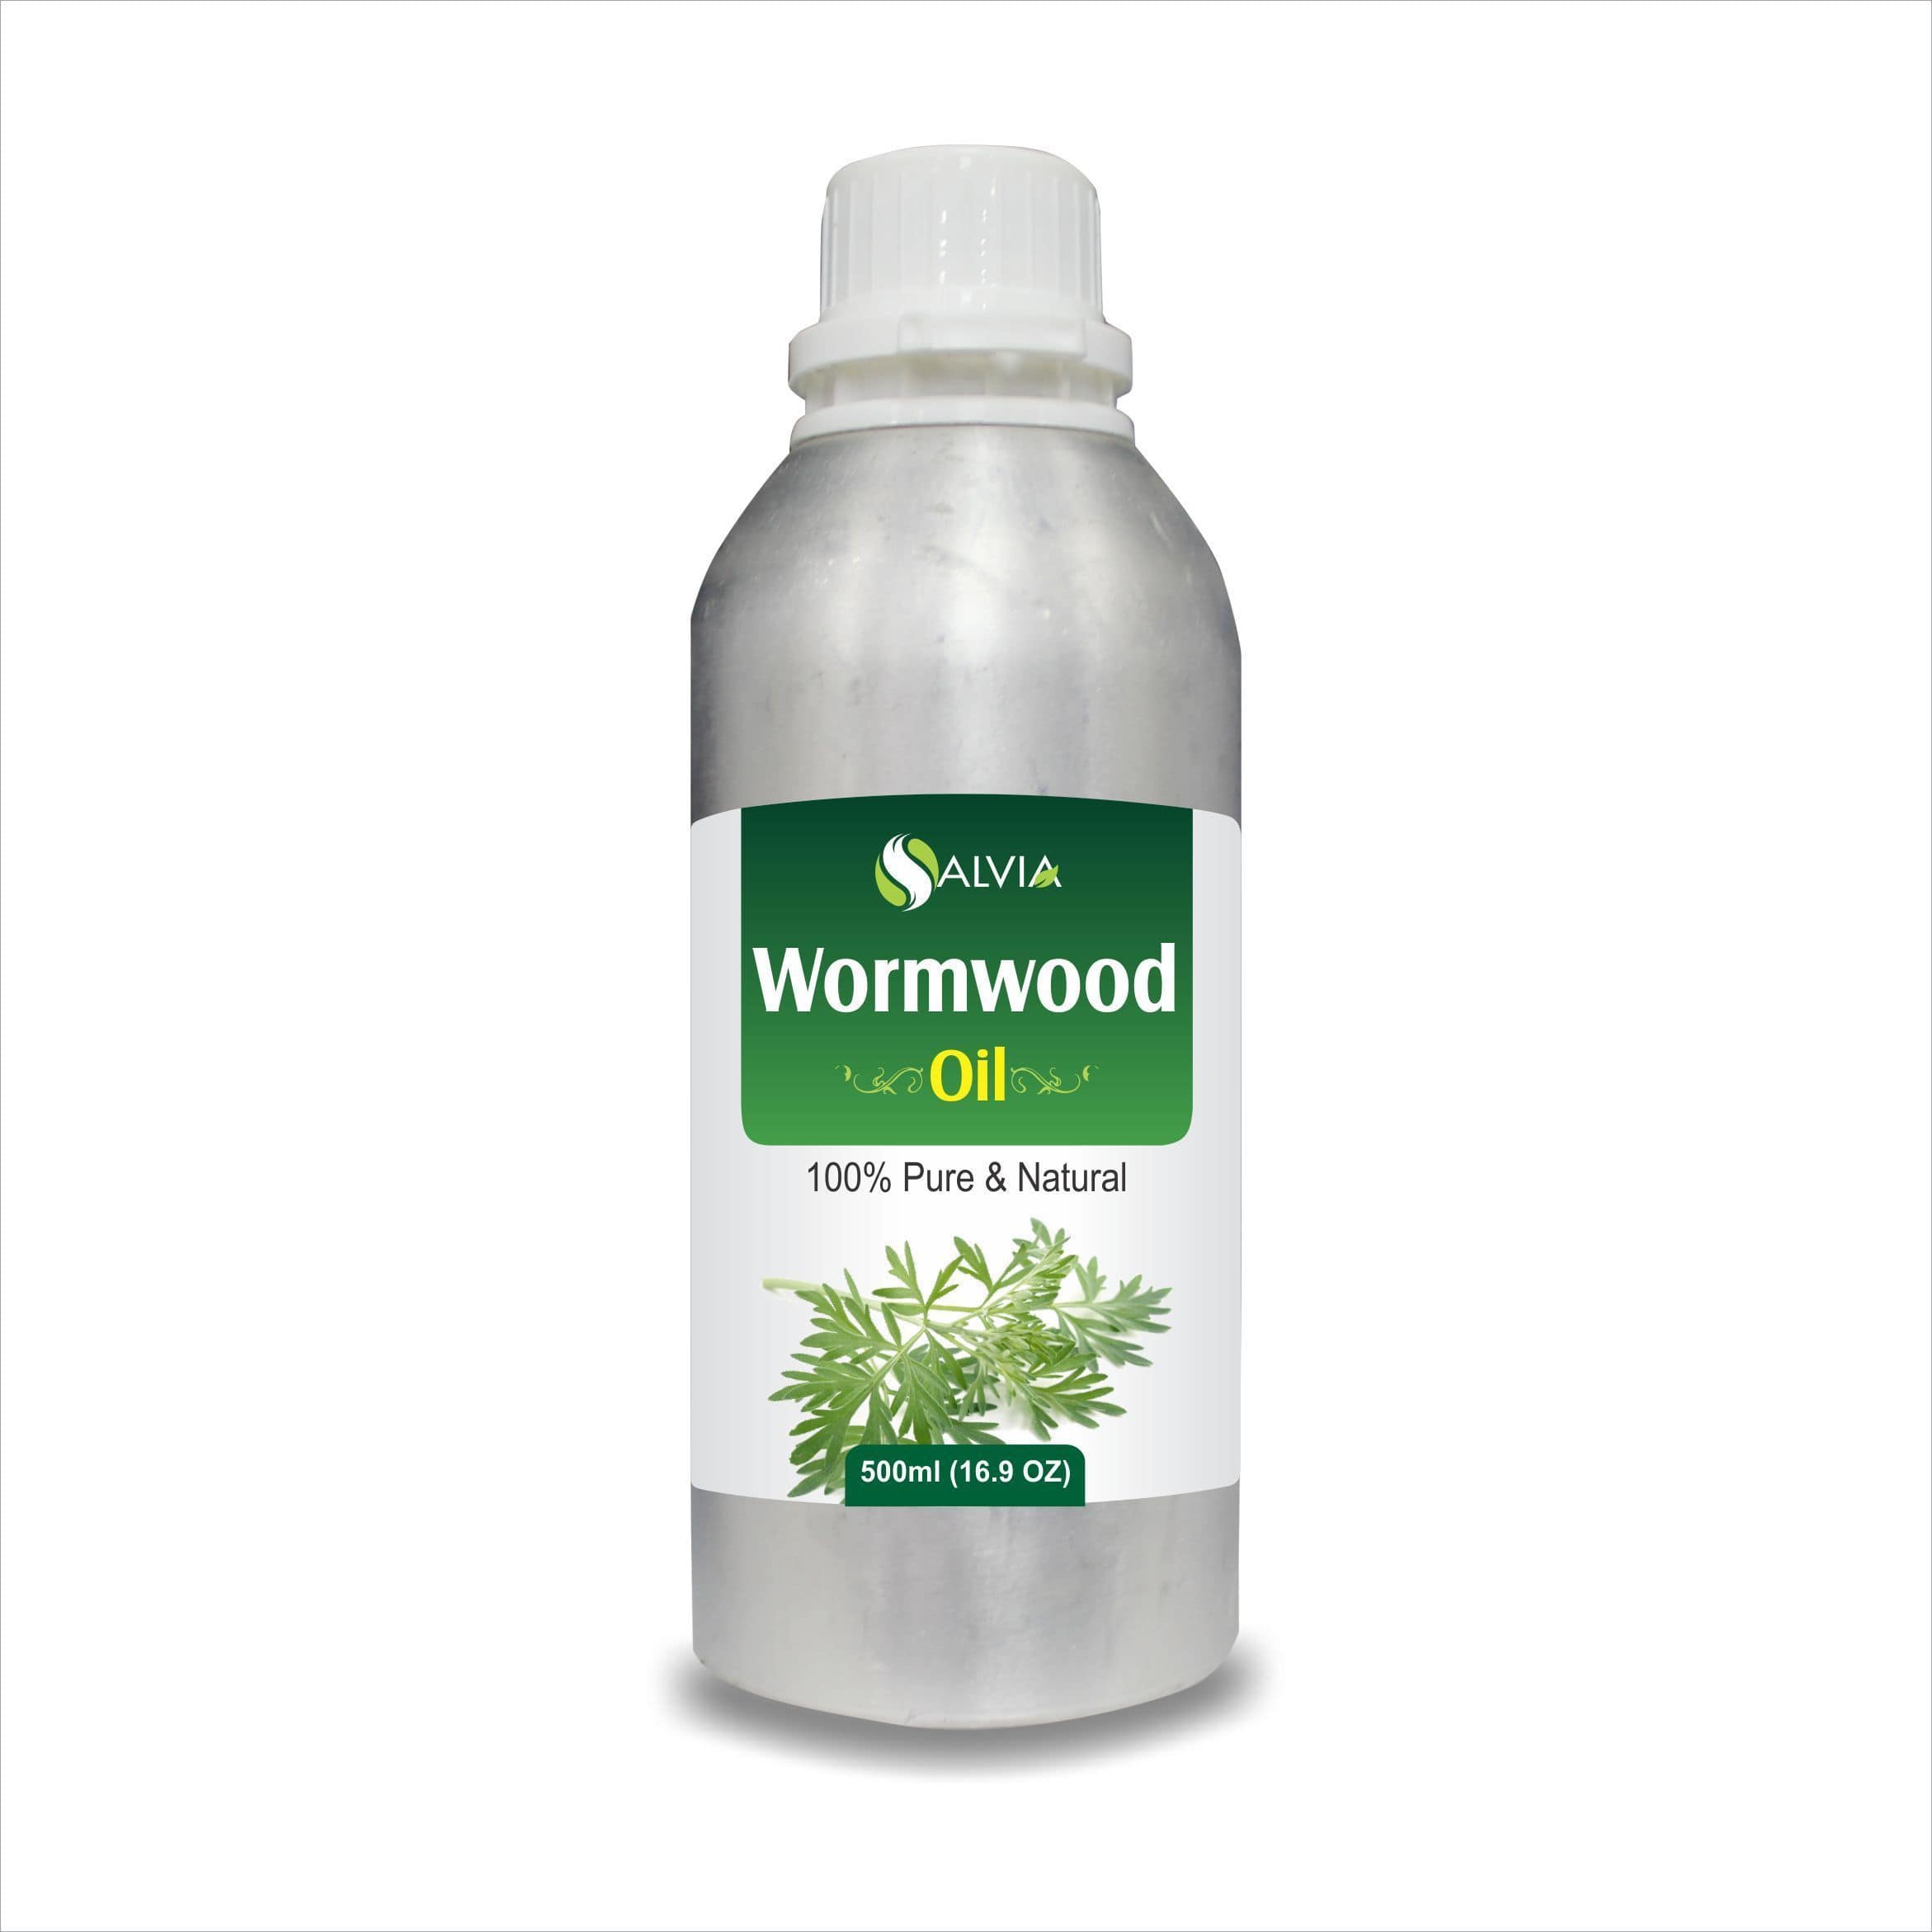 wormwood oil benefits